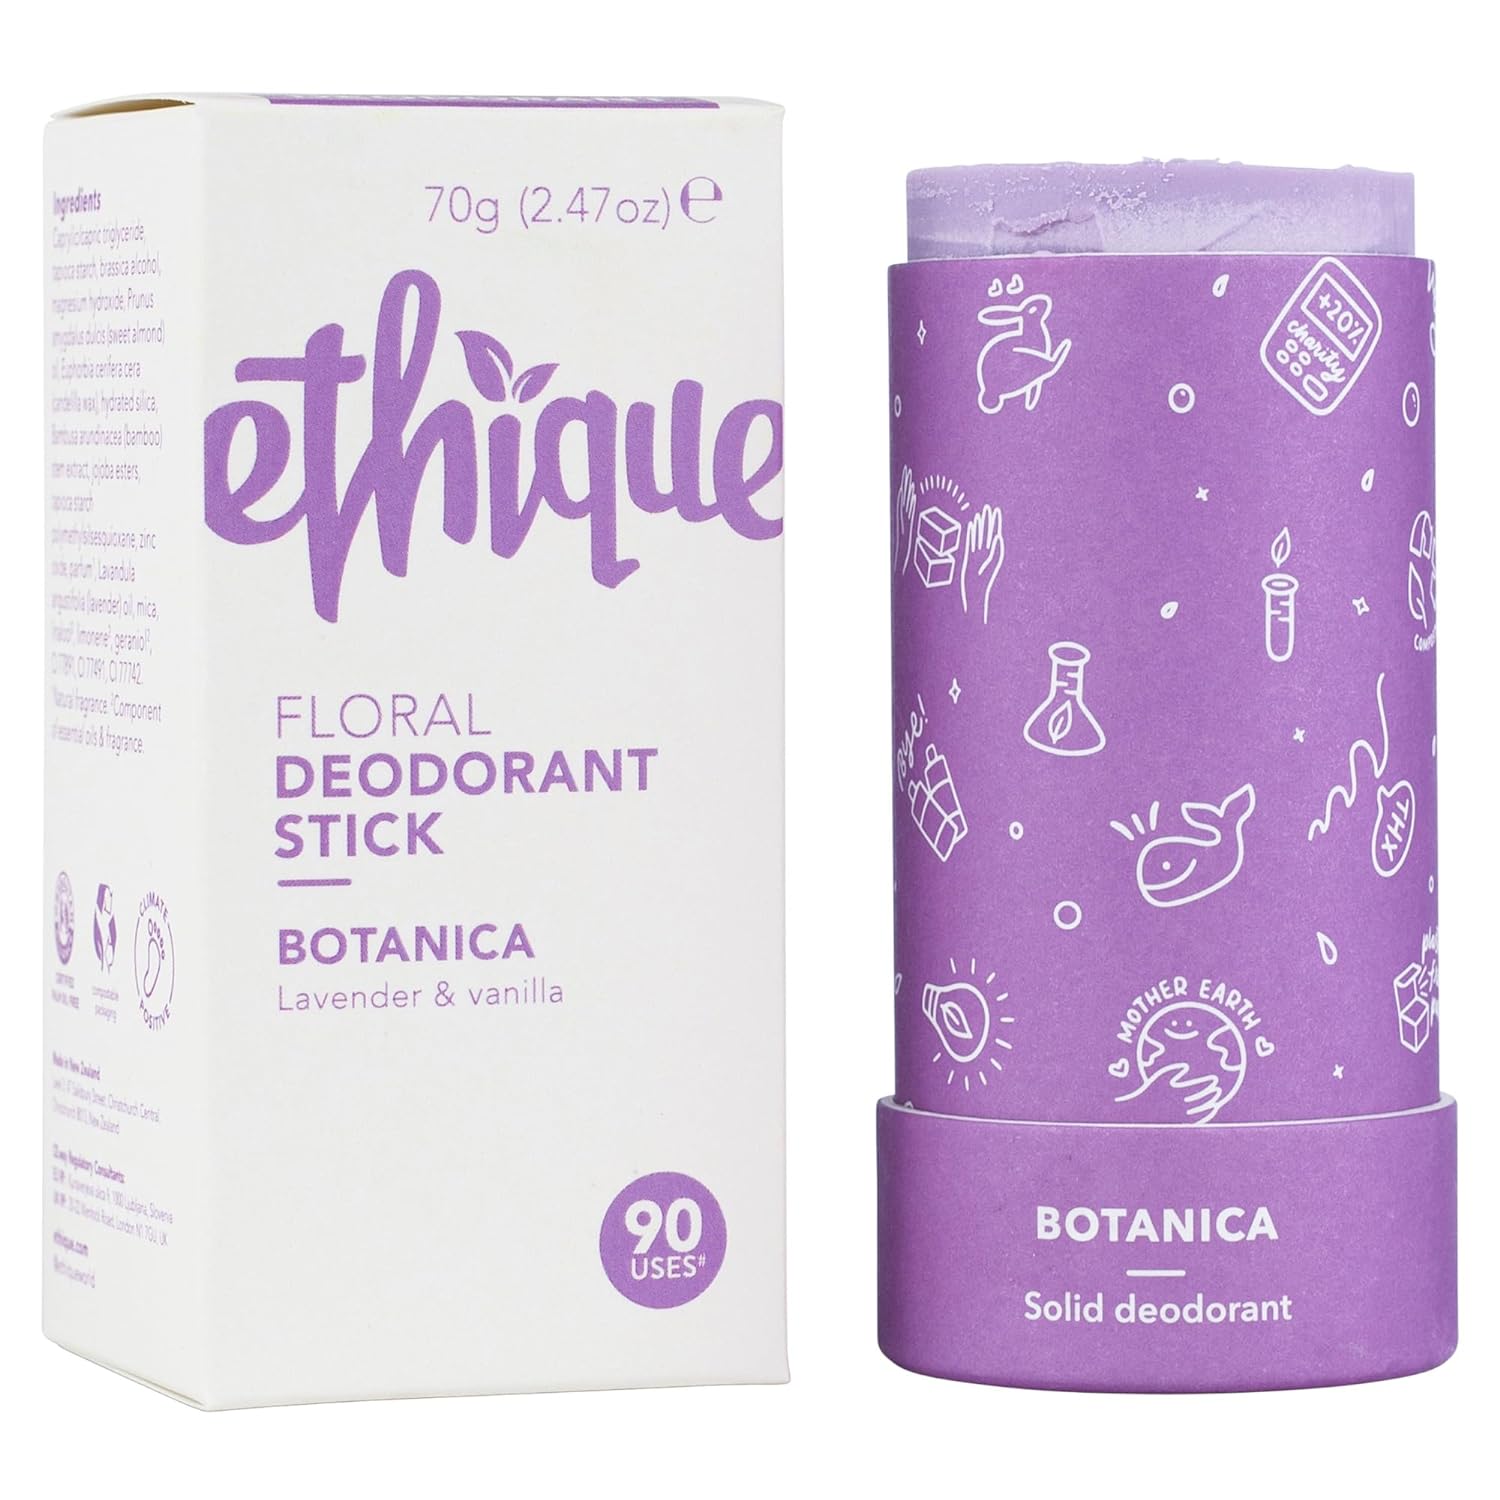 Ethique Botanica Floral Deodorant Bar for Men & Women - Aluminum-Free, Plastic-Free, Vegan, Cruelty-Free, Eco-Friendly, 2.47 oz (Pack of 1)